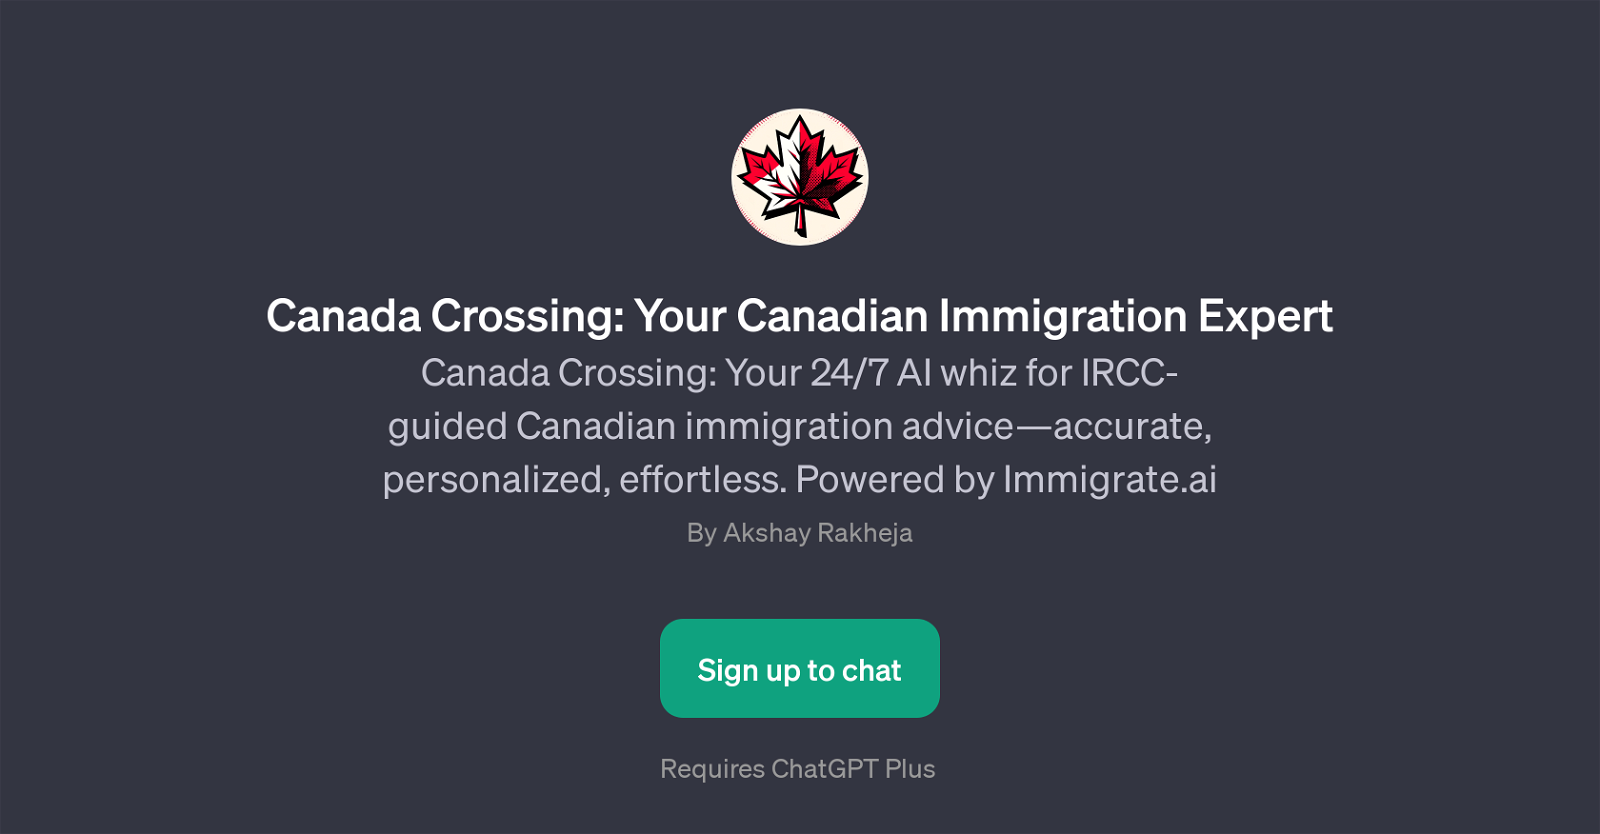 Canada Crossing website